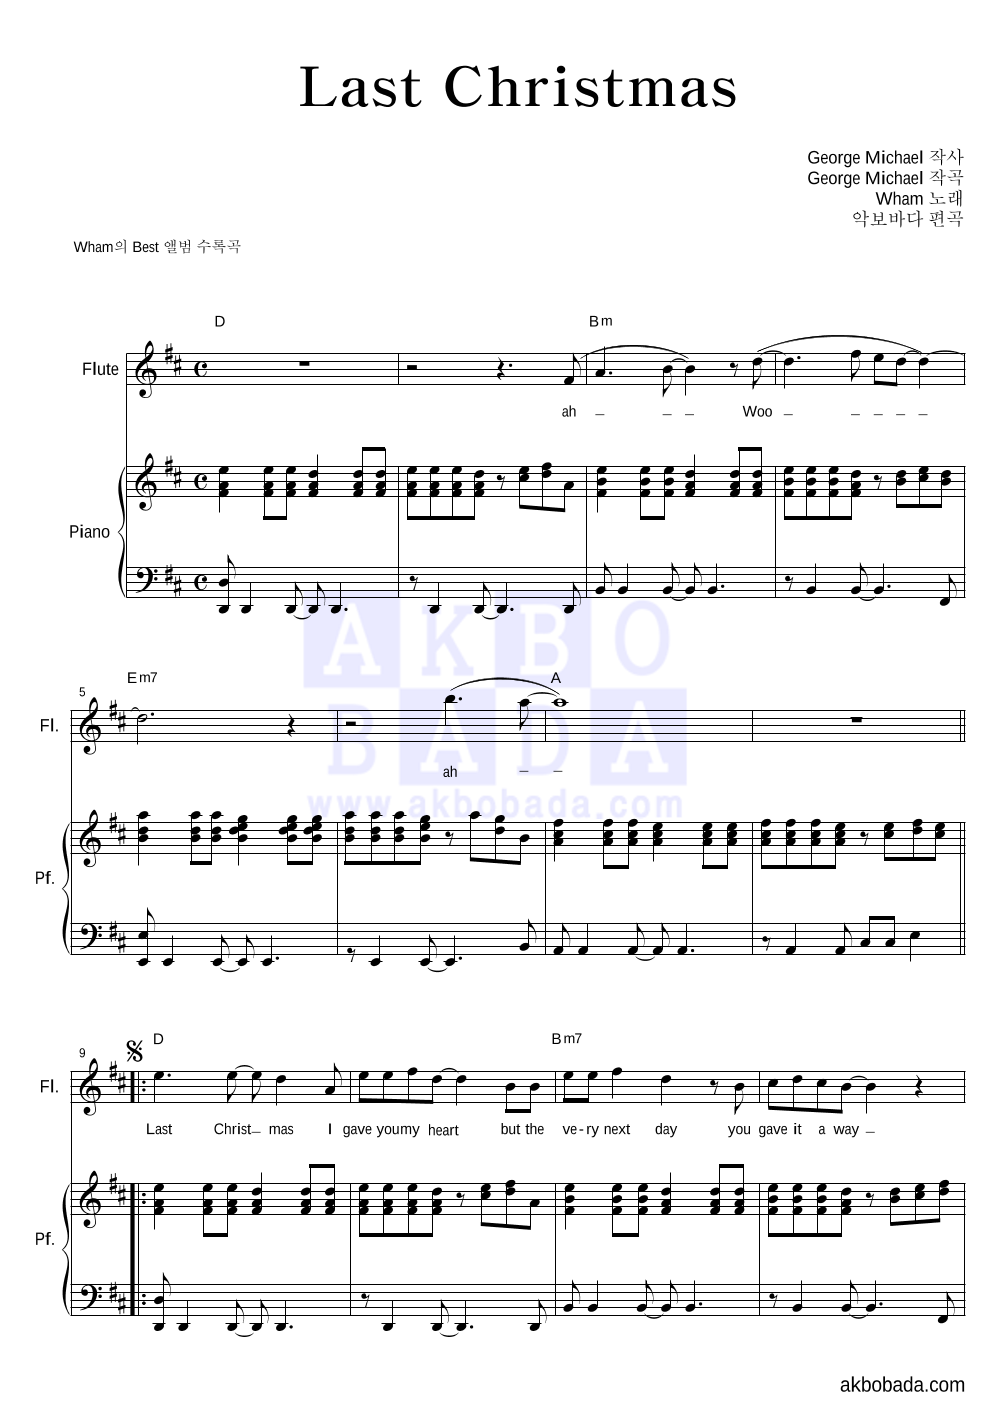 Wham - Last Christmas 플룻&피아노 악보 